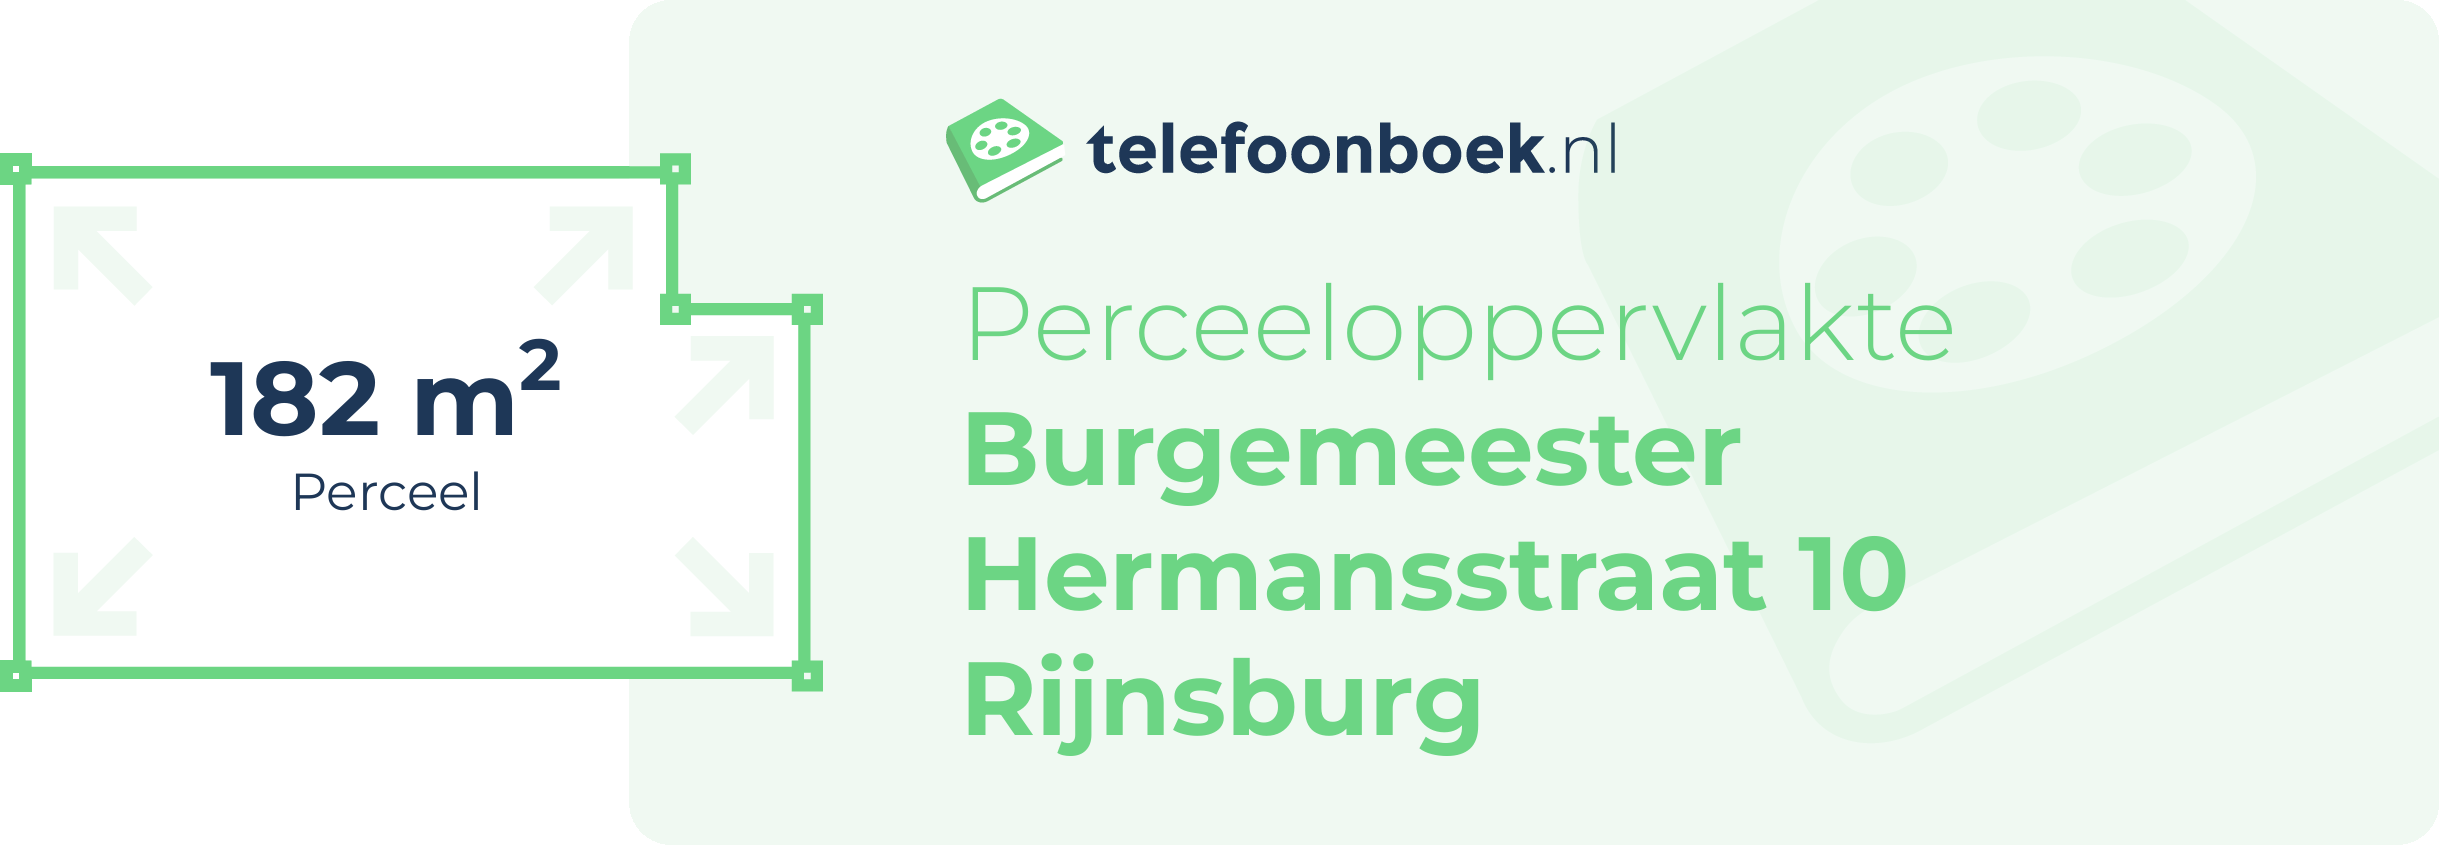 Perceeloppervlakte Burgemeester Hermansstraat 10 Rijnsburg